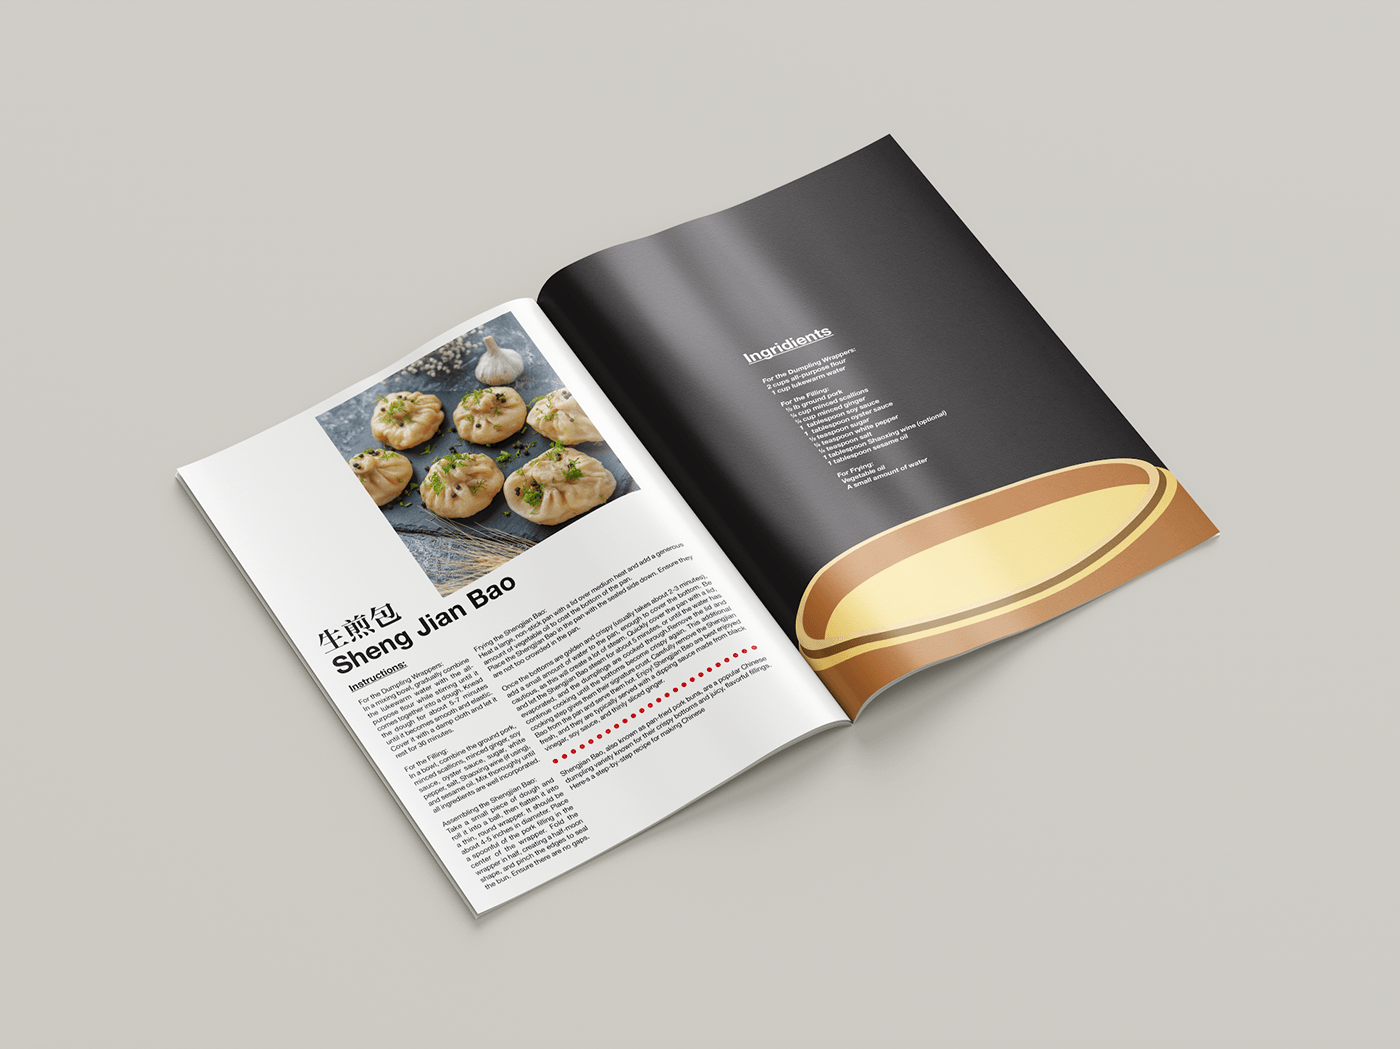 newsletter Magazine design dumplings Chinese style magazine cover design Chinese Food china chinese culture